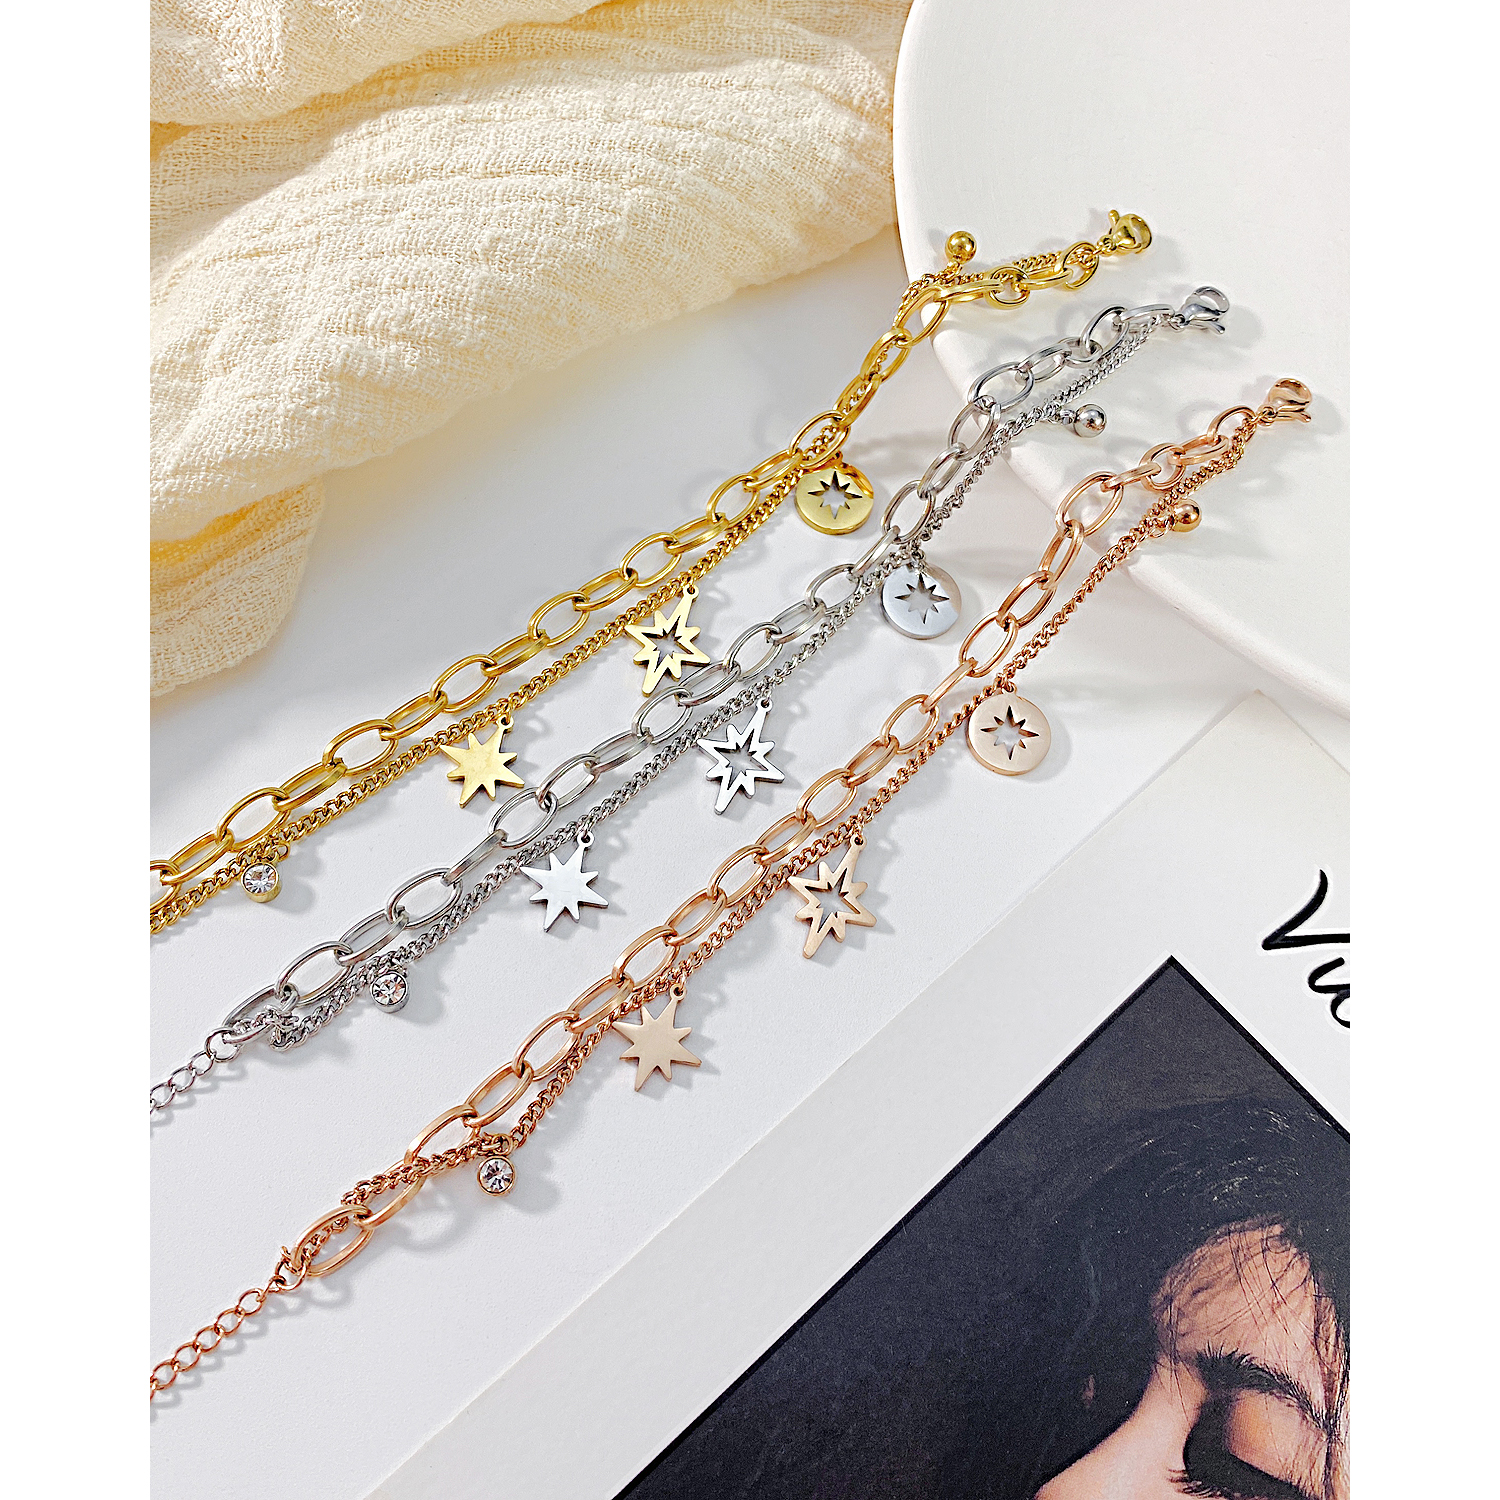 Personalized Charm Bracelets